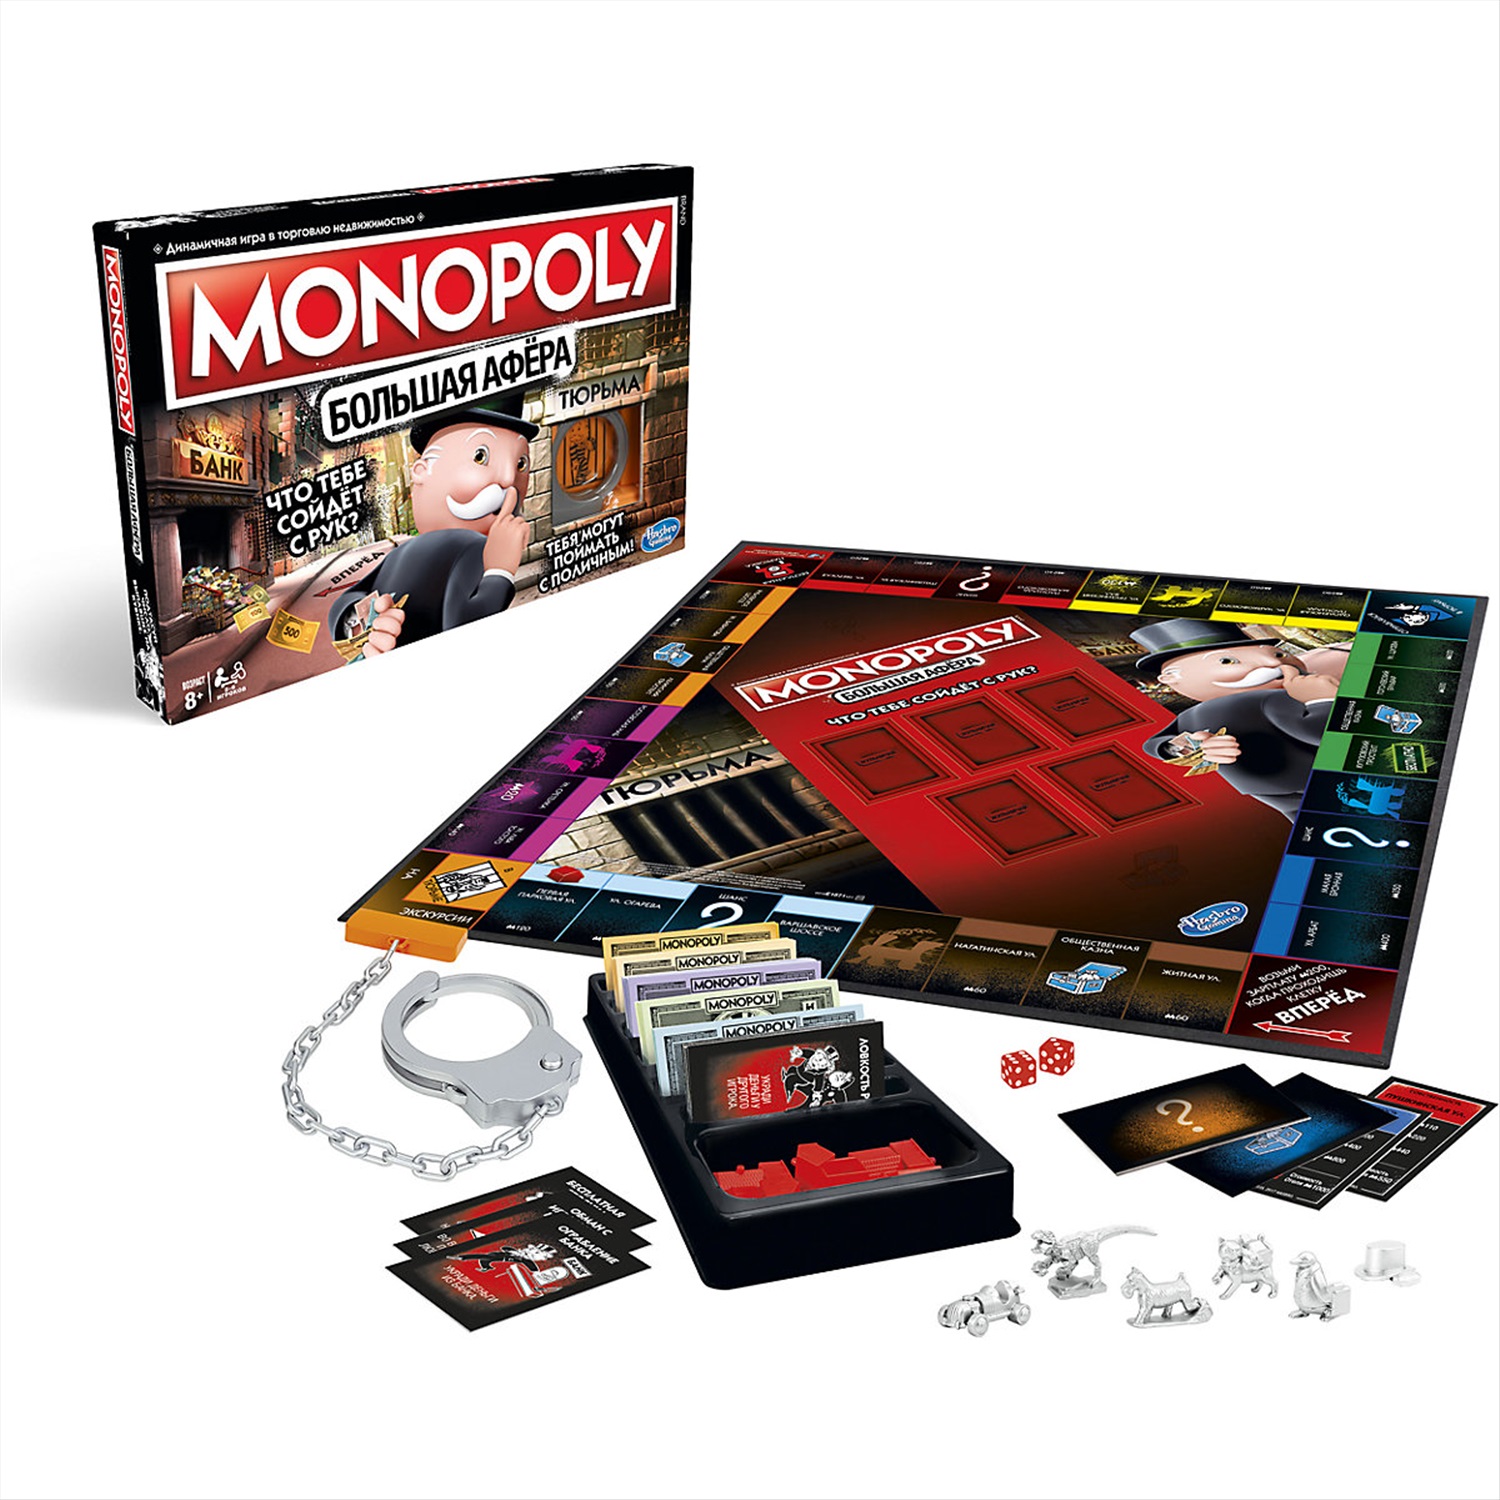 Игра монополия hasbro. Игра настольная Hasbro "Монополия большая афера". Настольная игра Monopoly большая афера. Монополия Хасбро большая афера. Монополия Monopoly Хасбро.